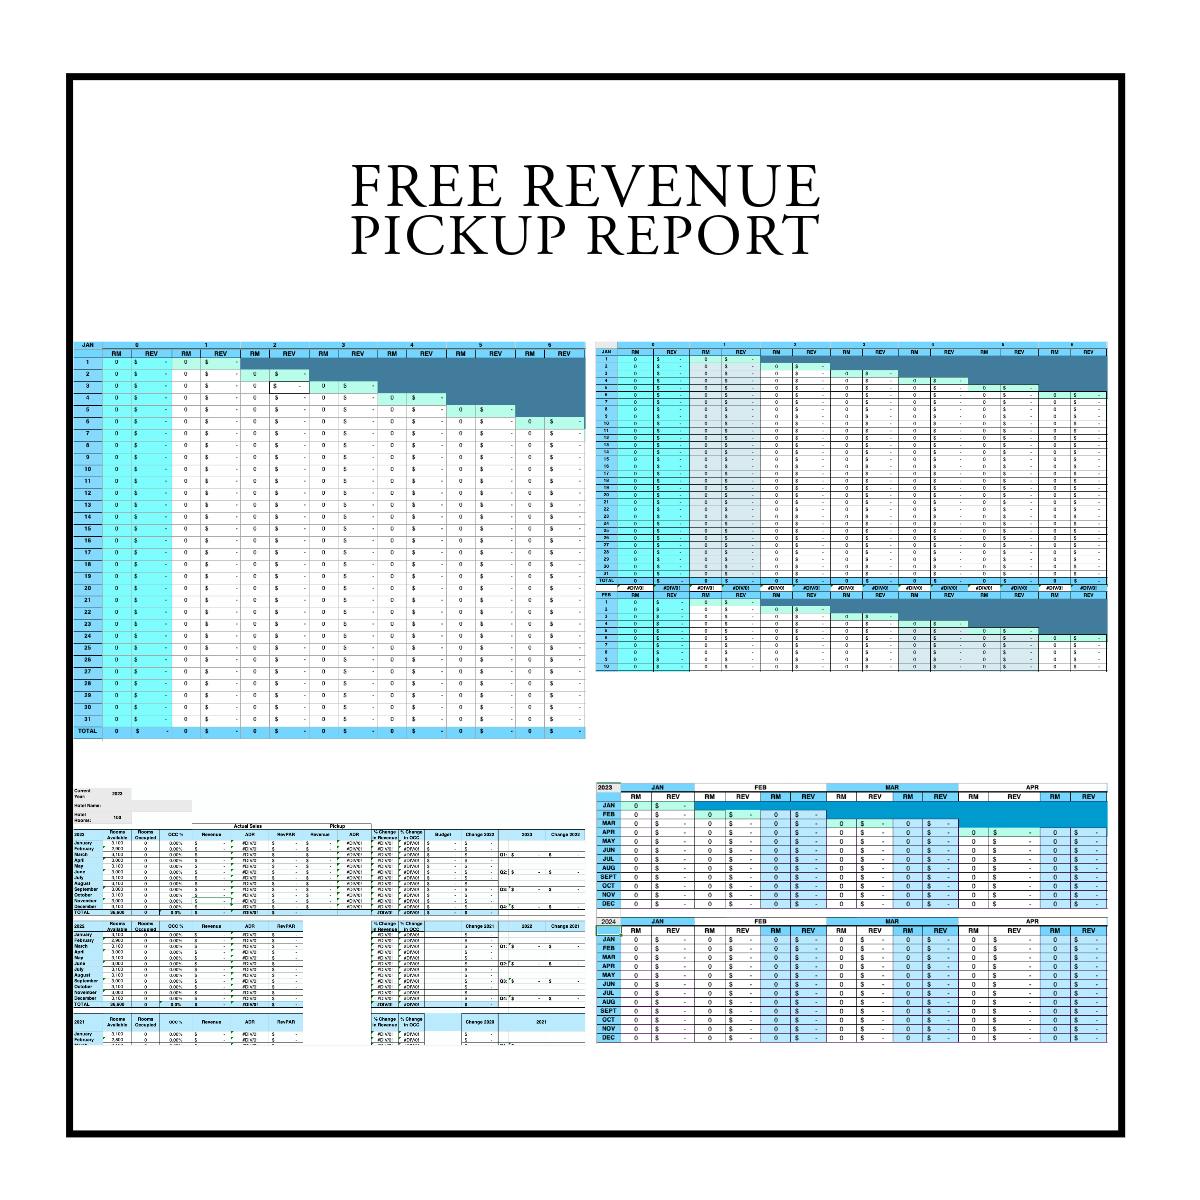 Hotel Revenue Pickup Report - Free (2019 Version)